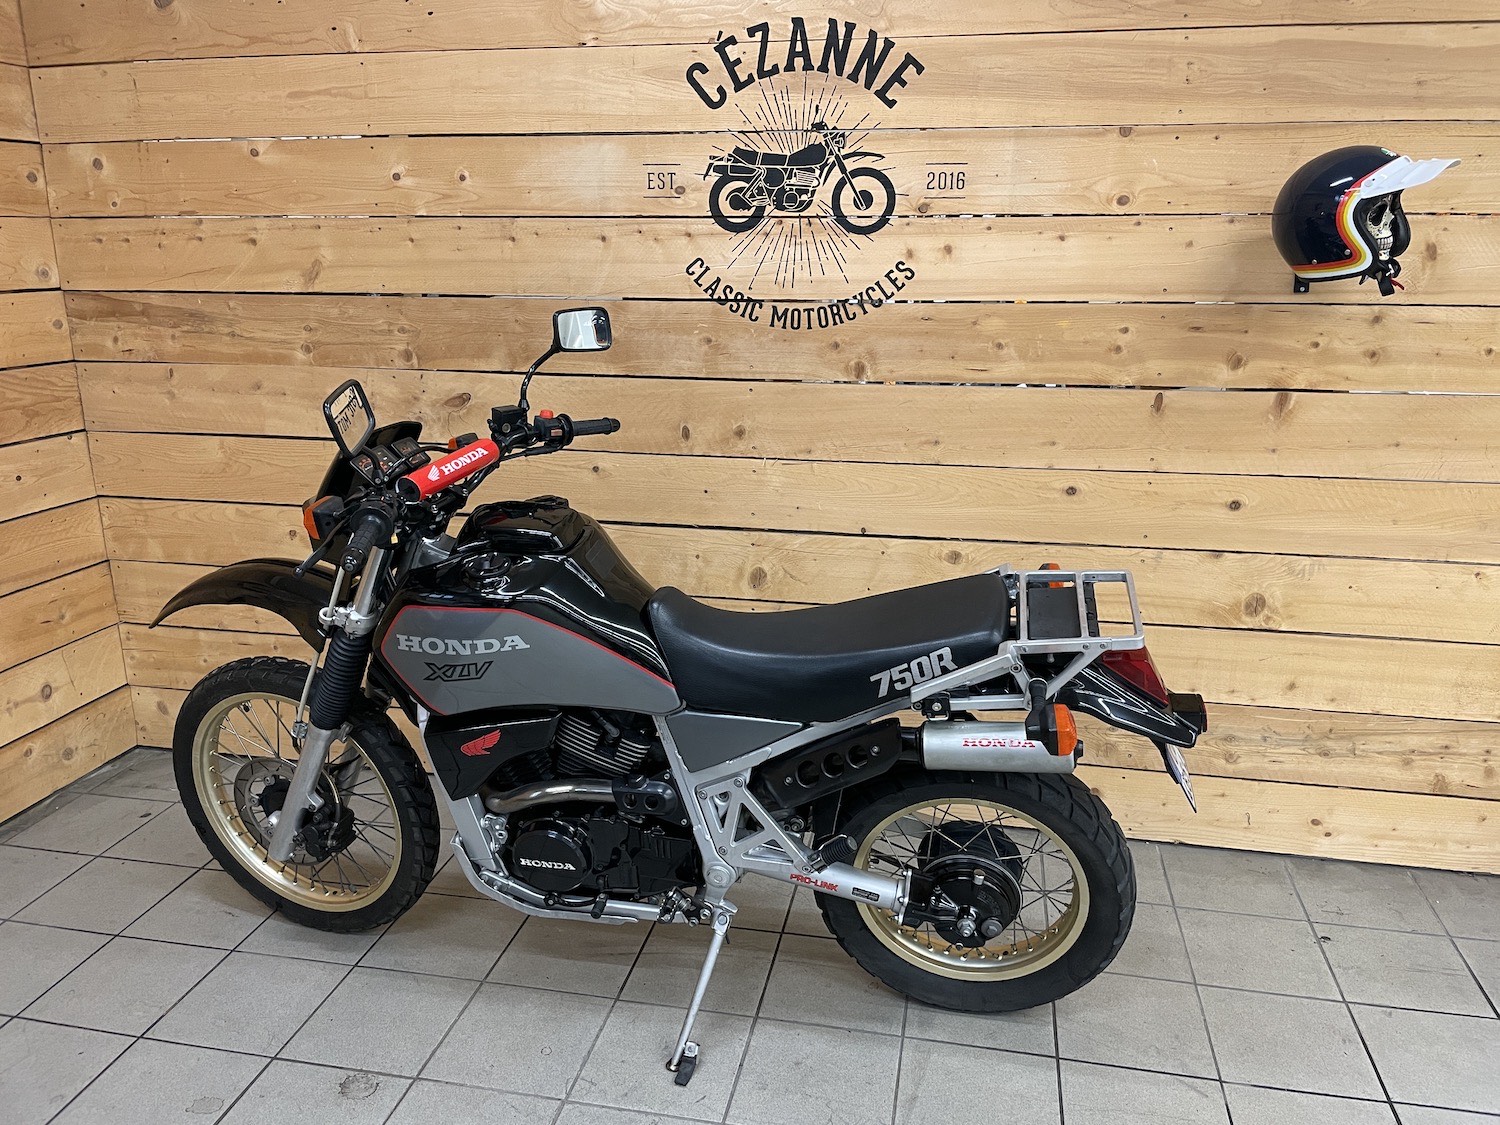 Honda_XLV_750R_cezanne_classic_motorcycles-118.jpg